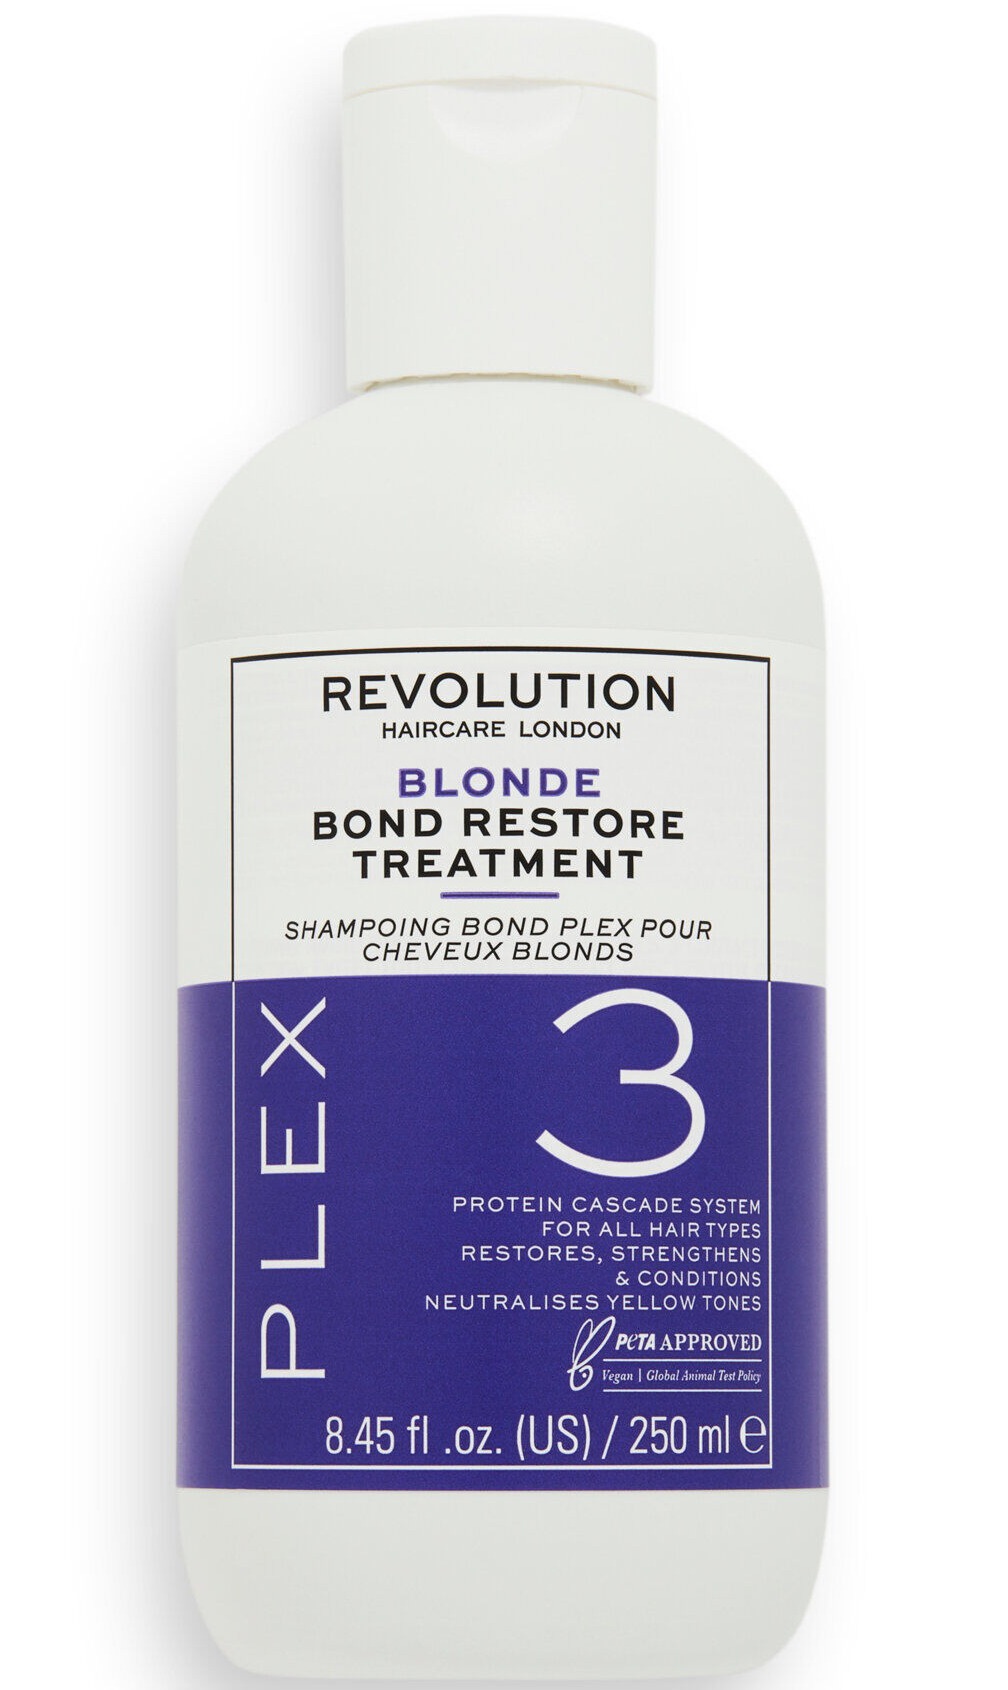 Revolution Haircare Blonde Plex 3 Bond Restore Treatment Ingredients Explained 